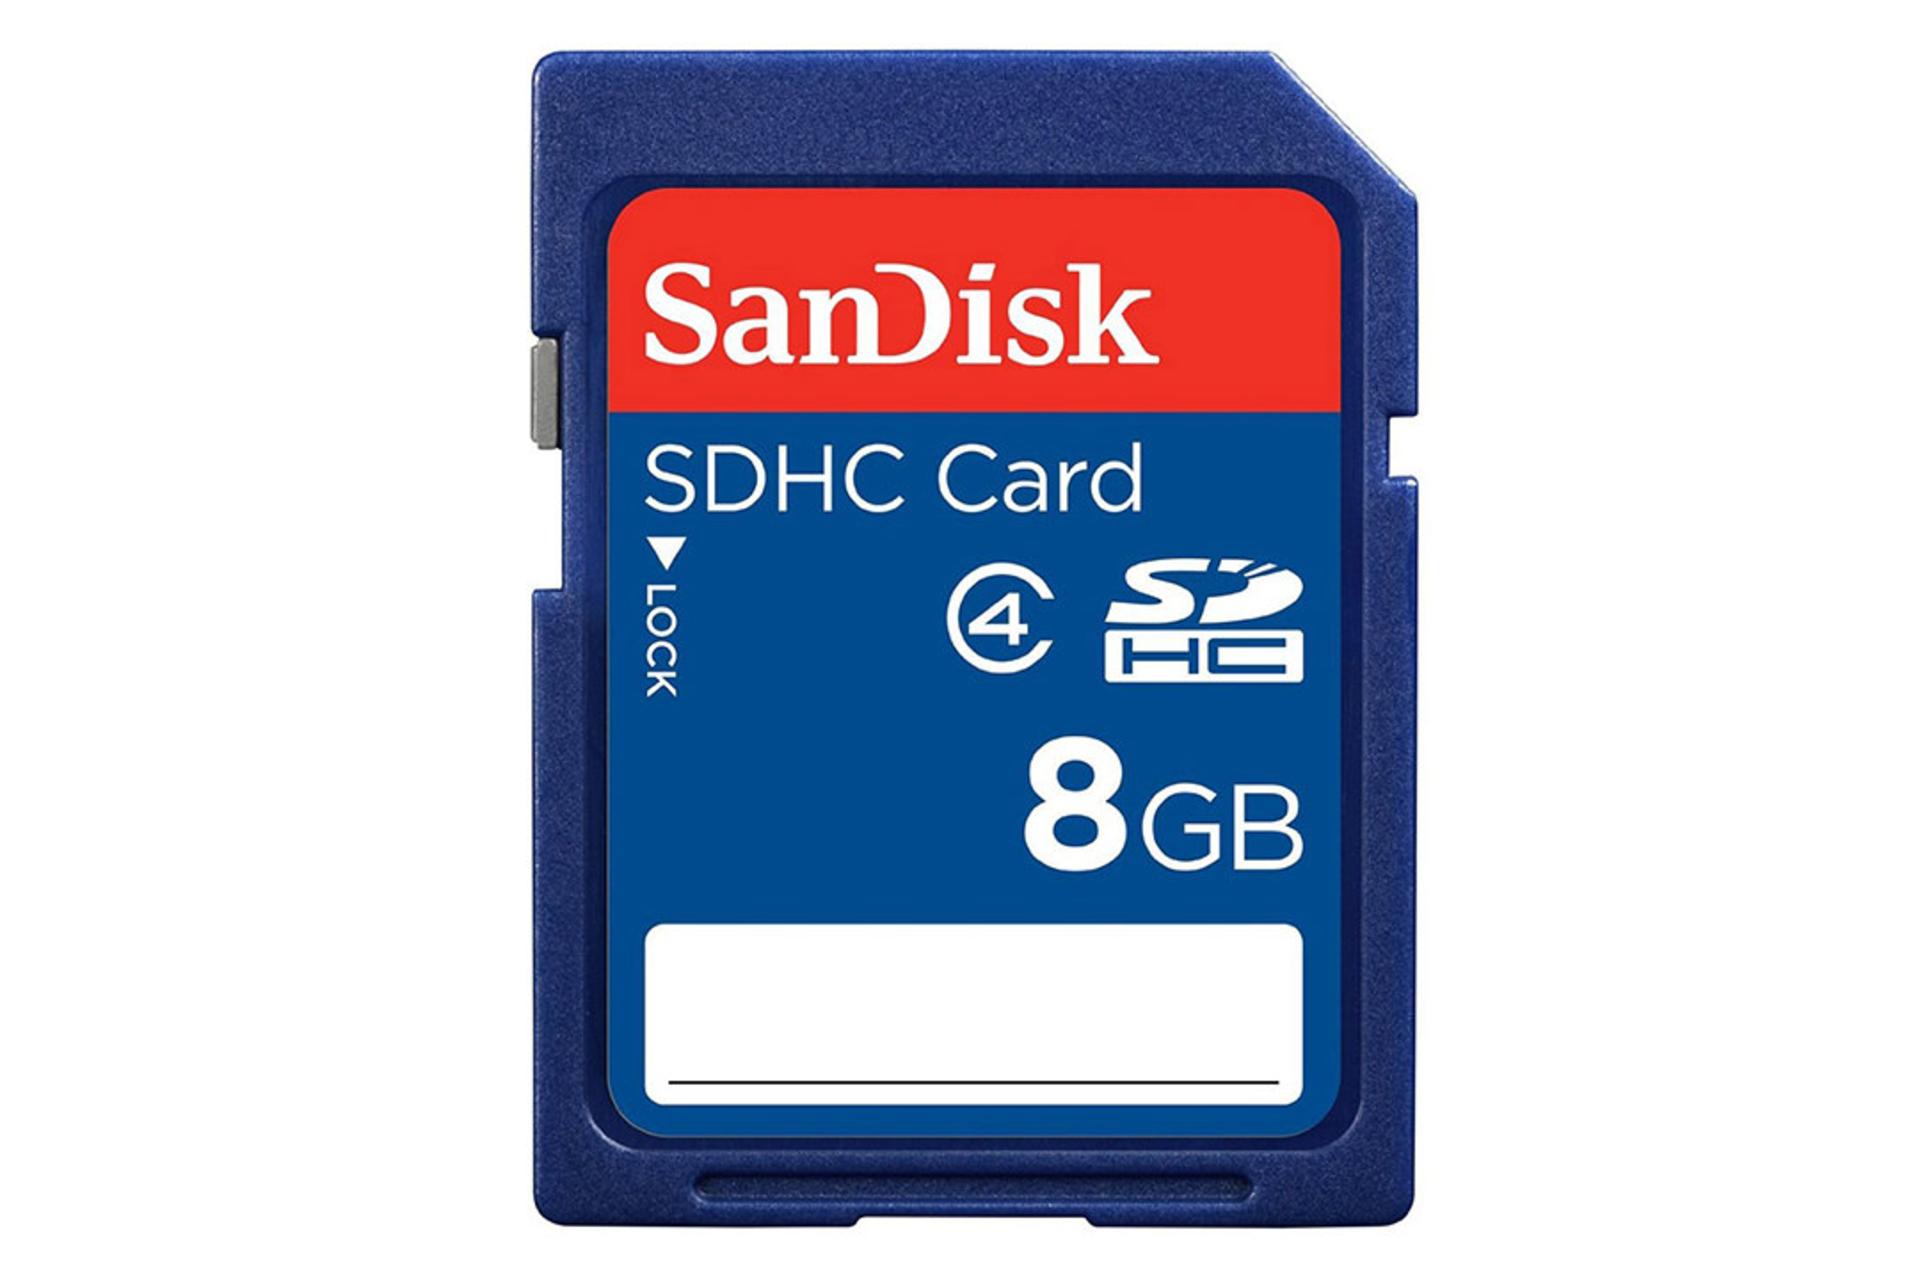 SanDisk SDHC Class 4 8GB